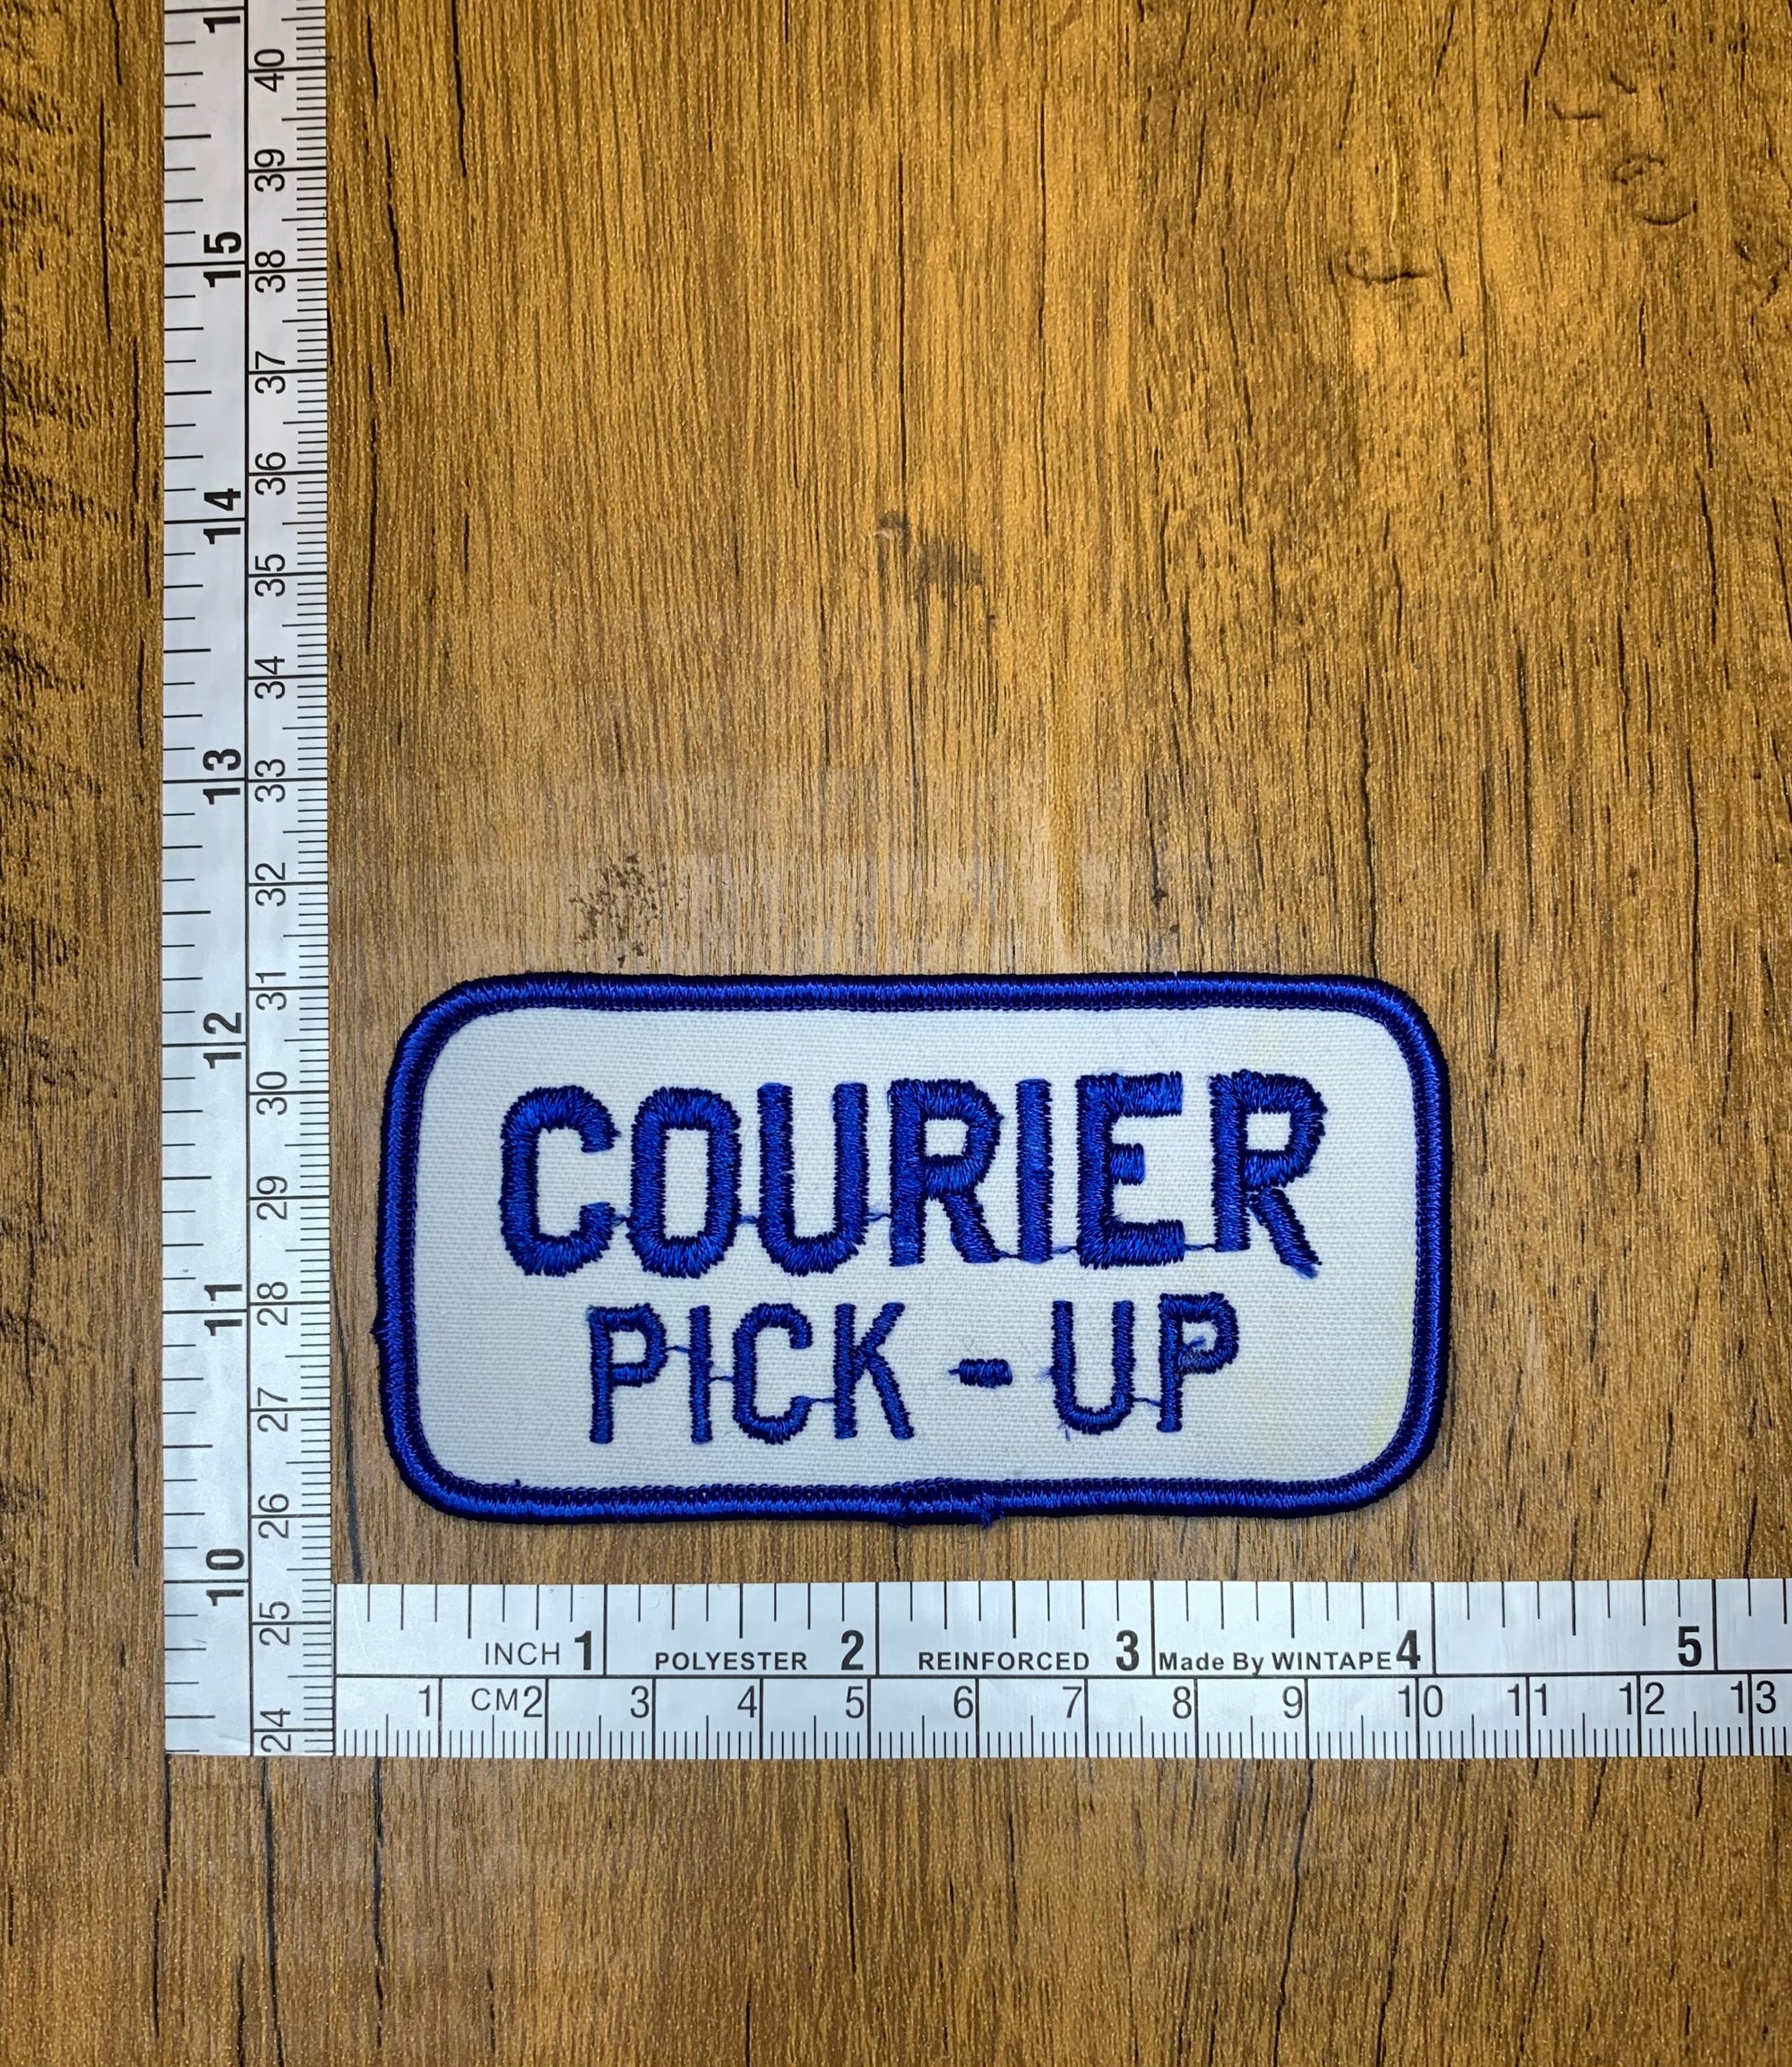 Vintage Courier Pick-Up